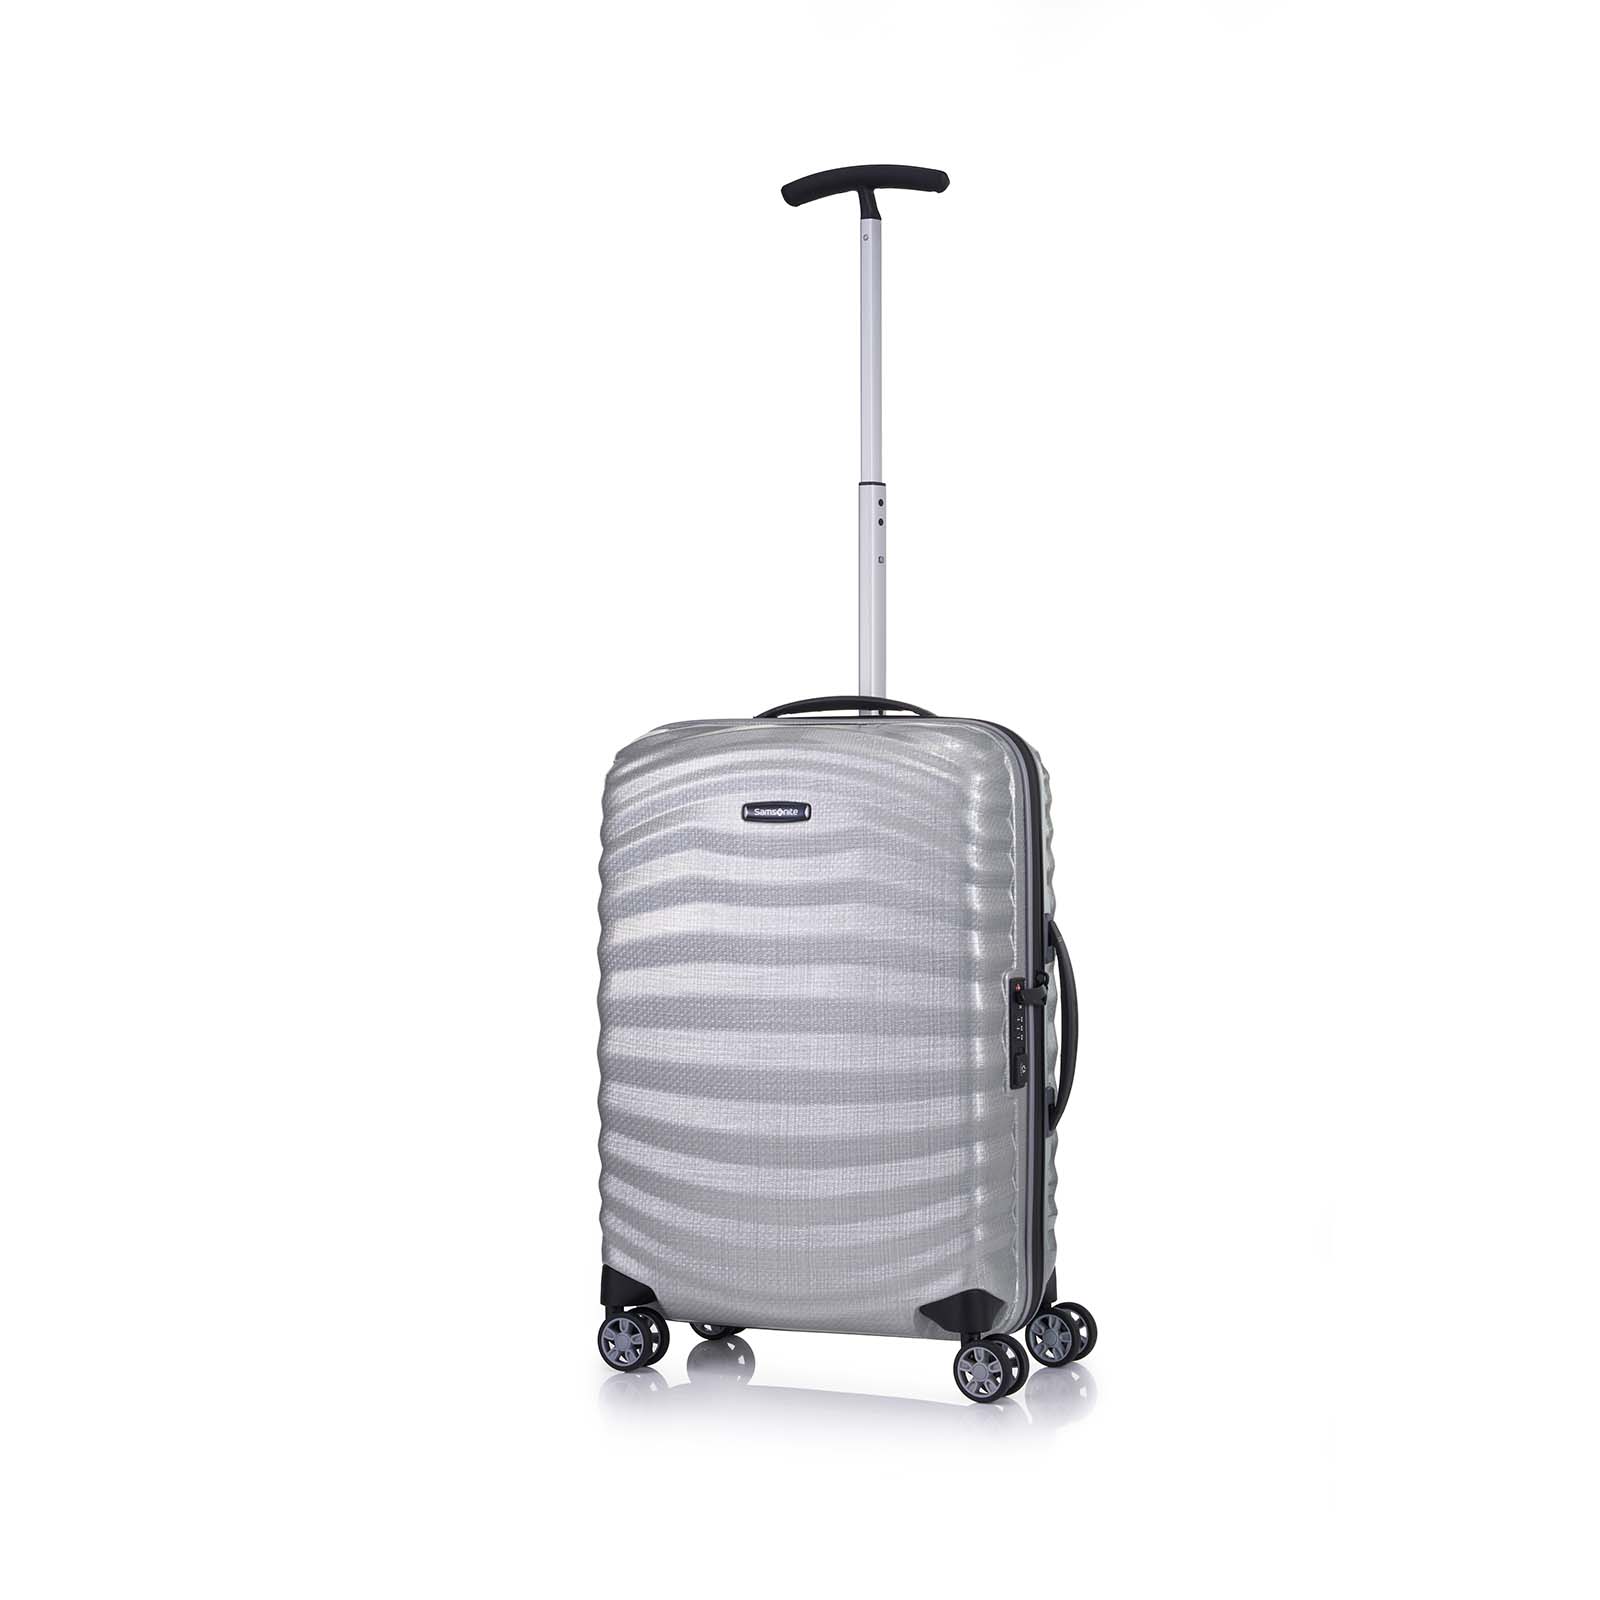 Samsonite-Lite-Shock-Sport-55cm-Suitcase-Silver-Front-Angle